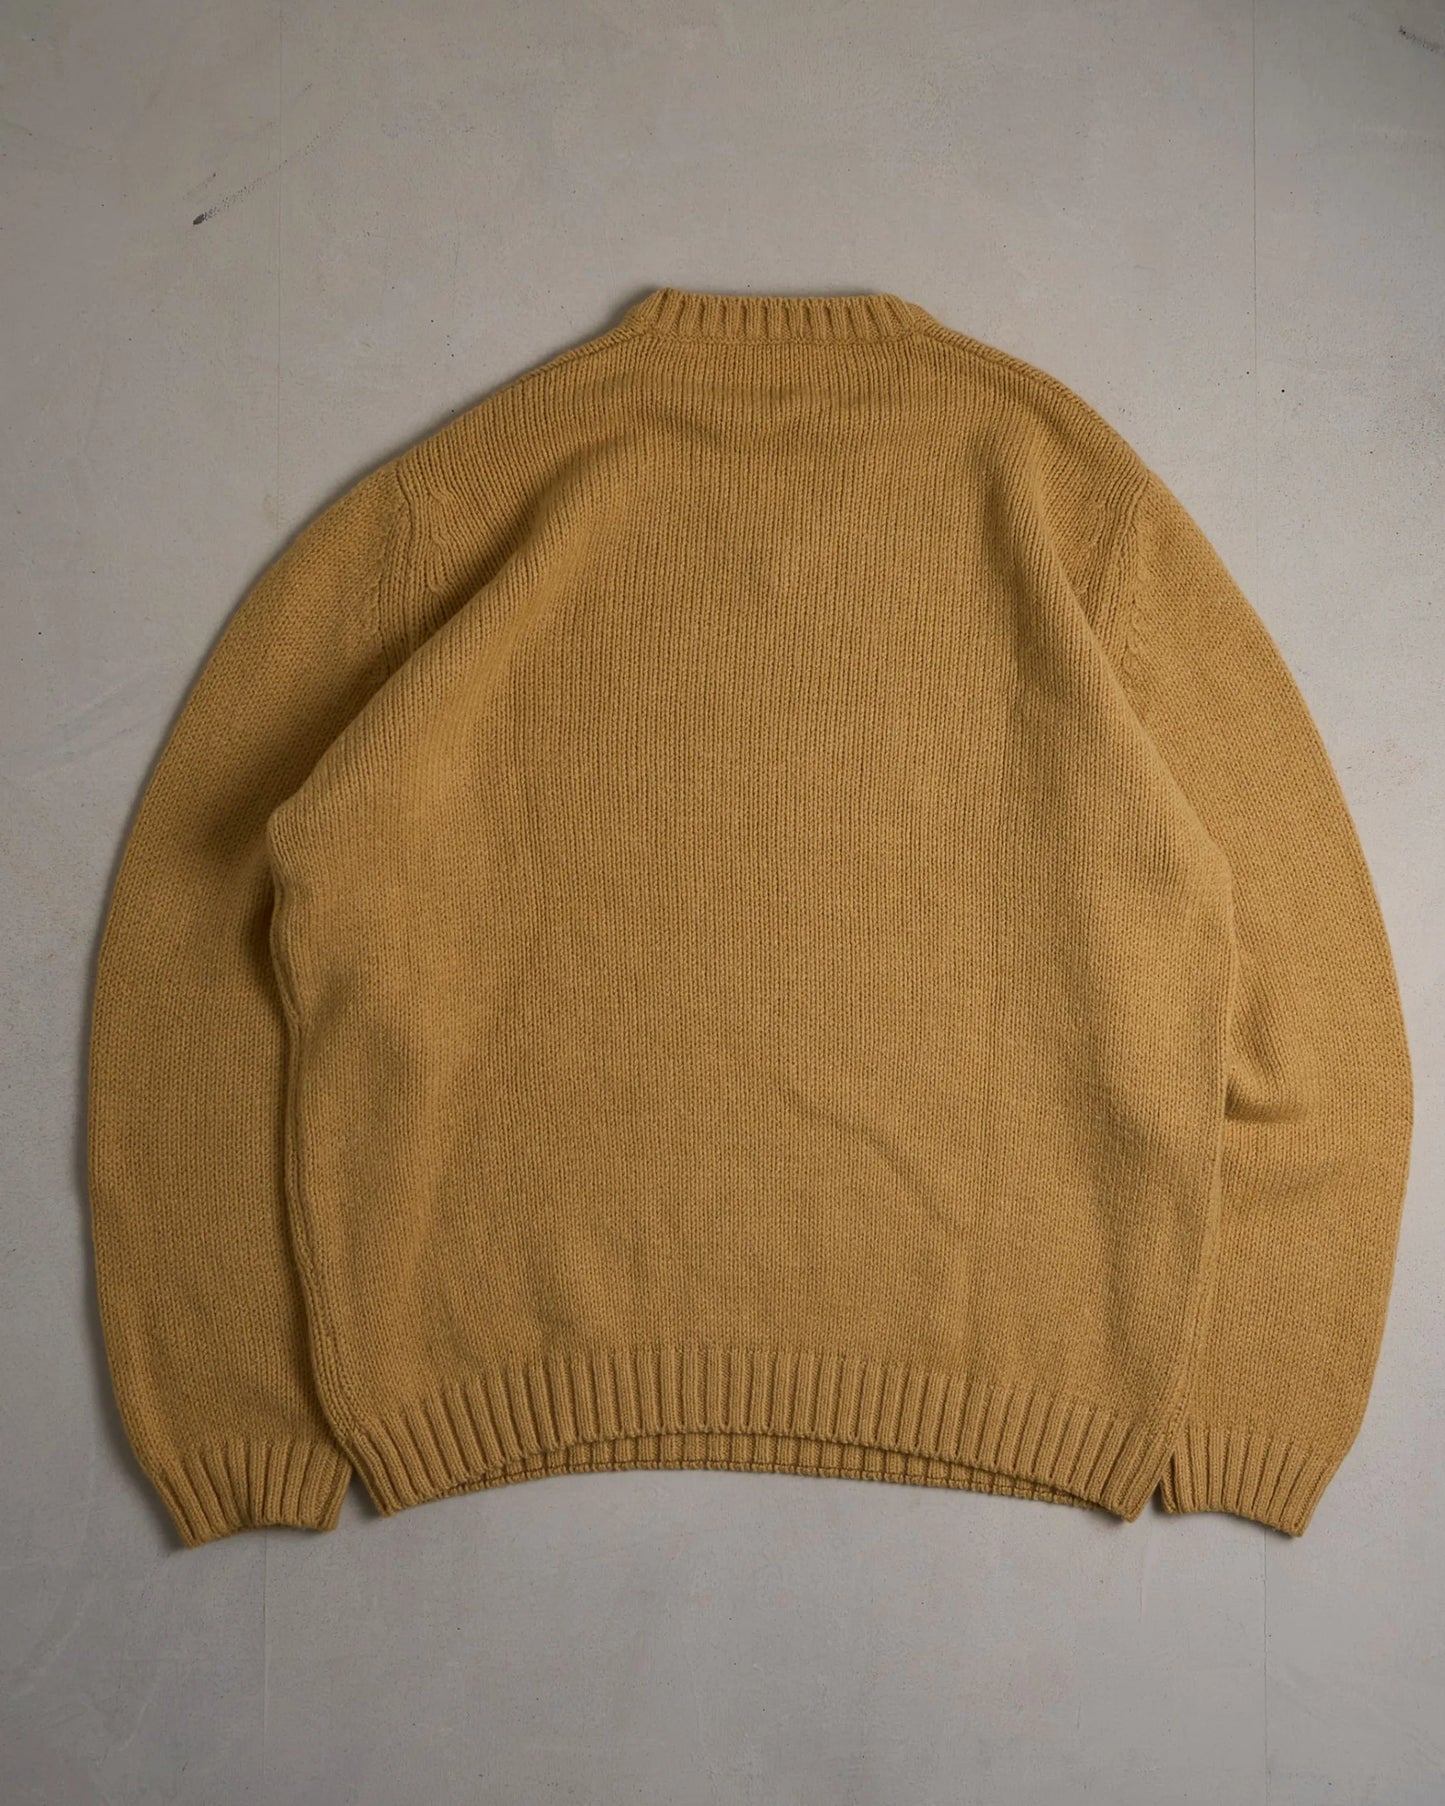 Vintage Mustard Sweater 